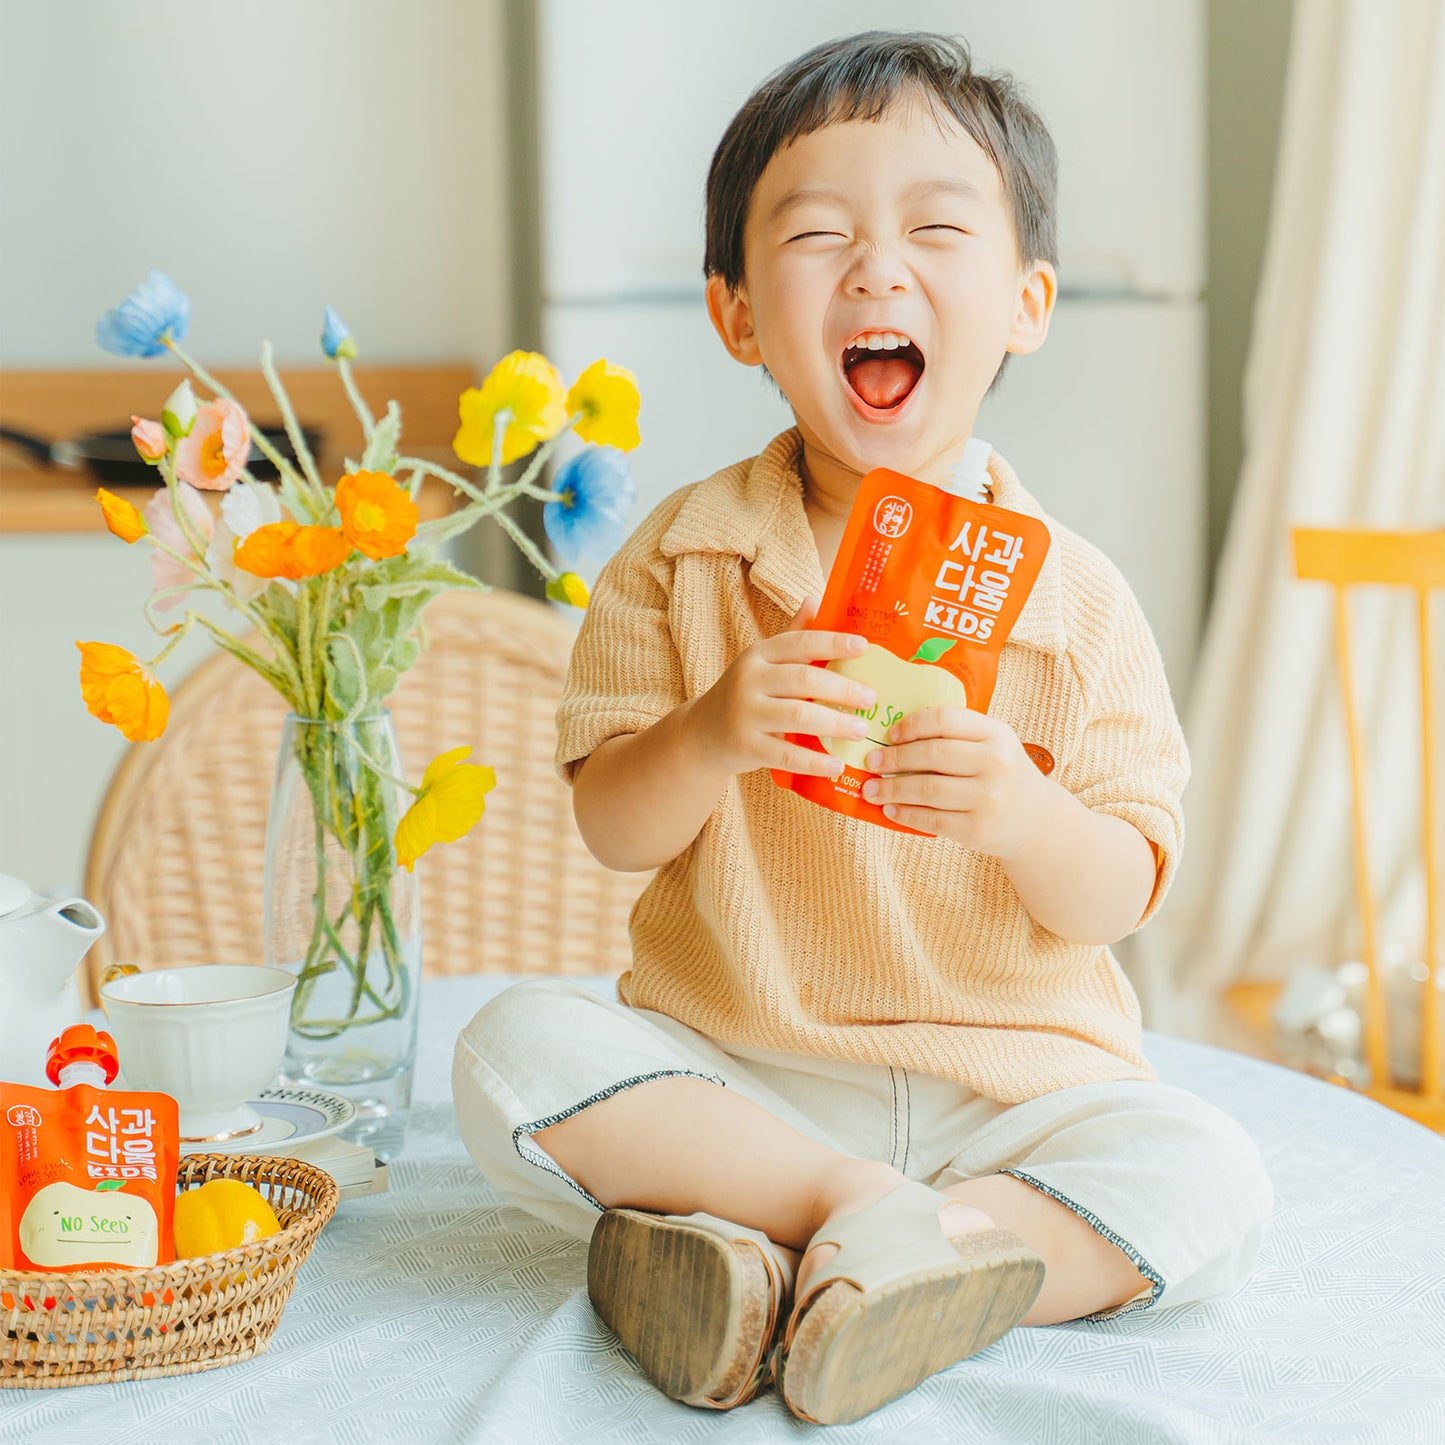 Sigolstory - 10-Pk NFC Seedless Apple Juice for Kids 120ml